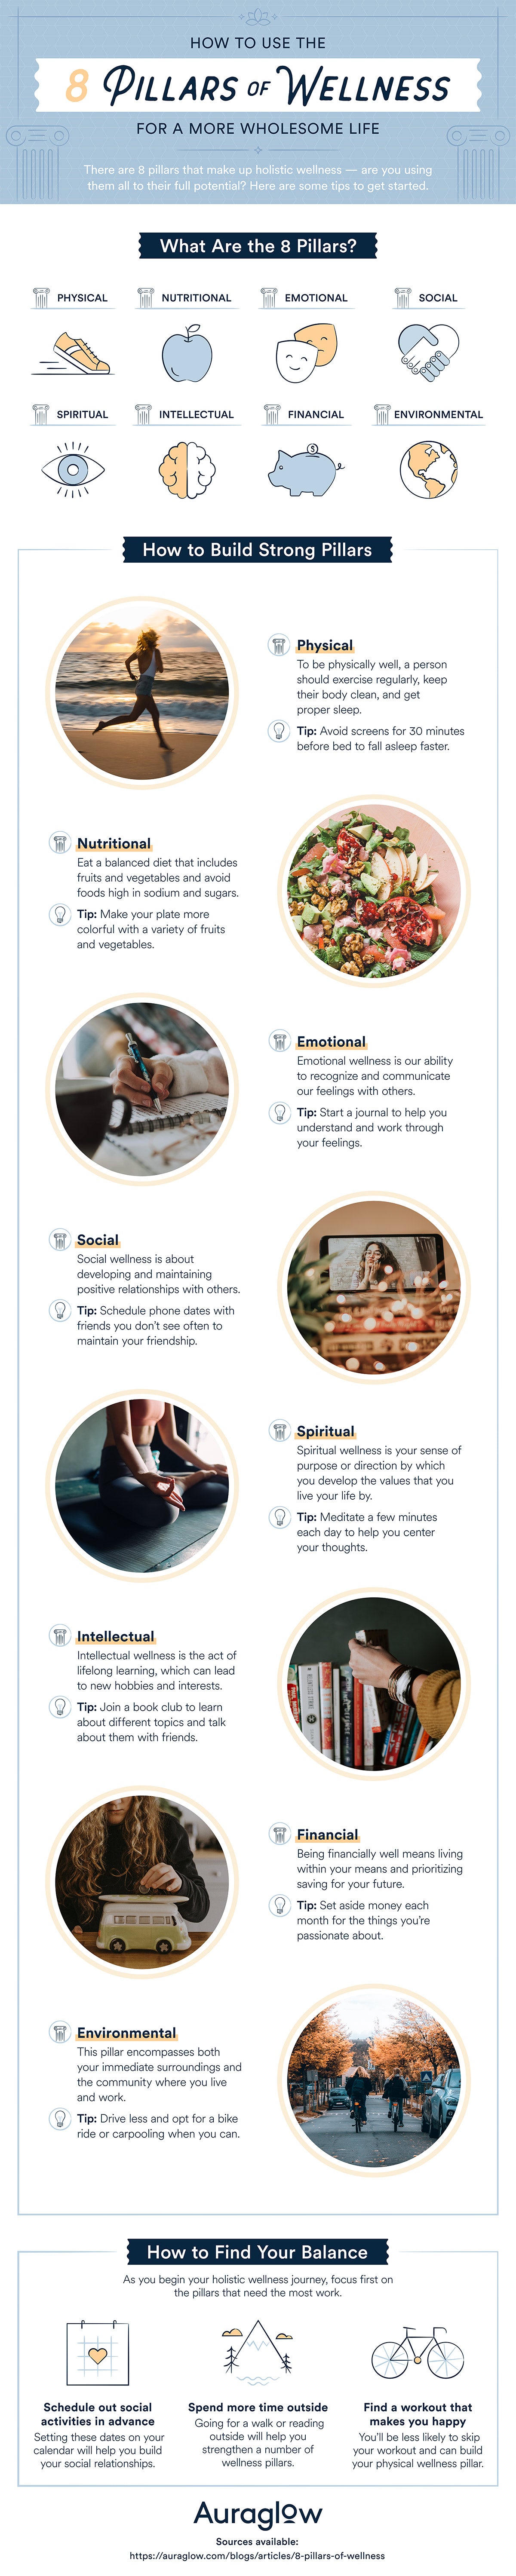 8 Pillars of Wellness